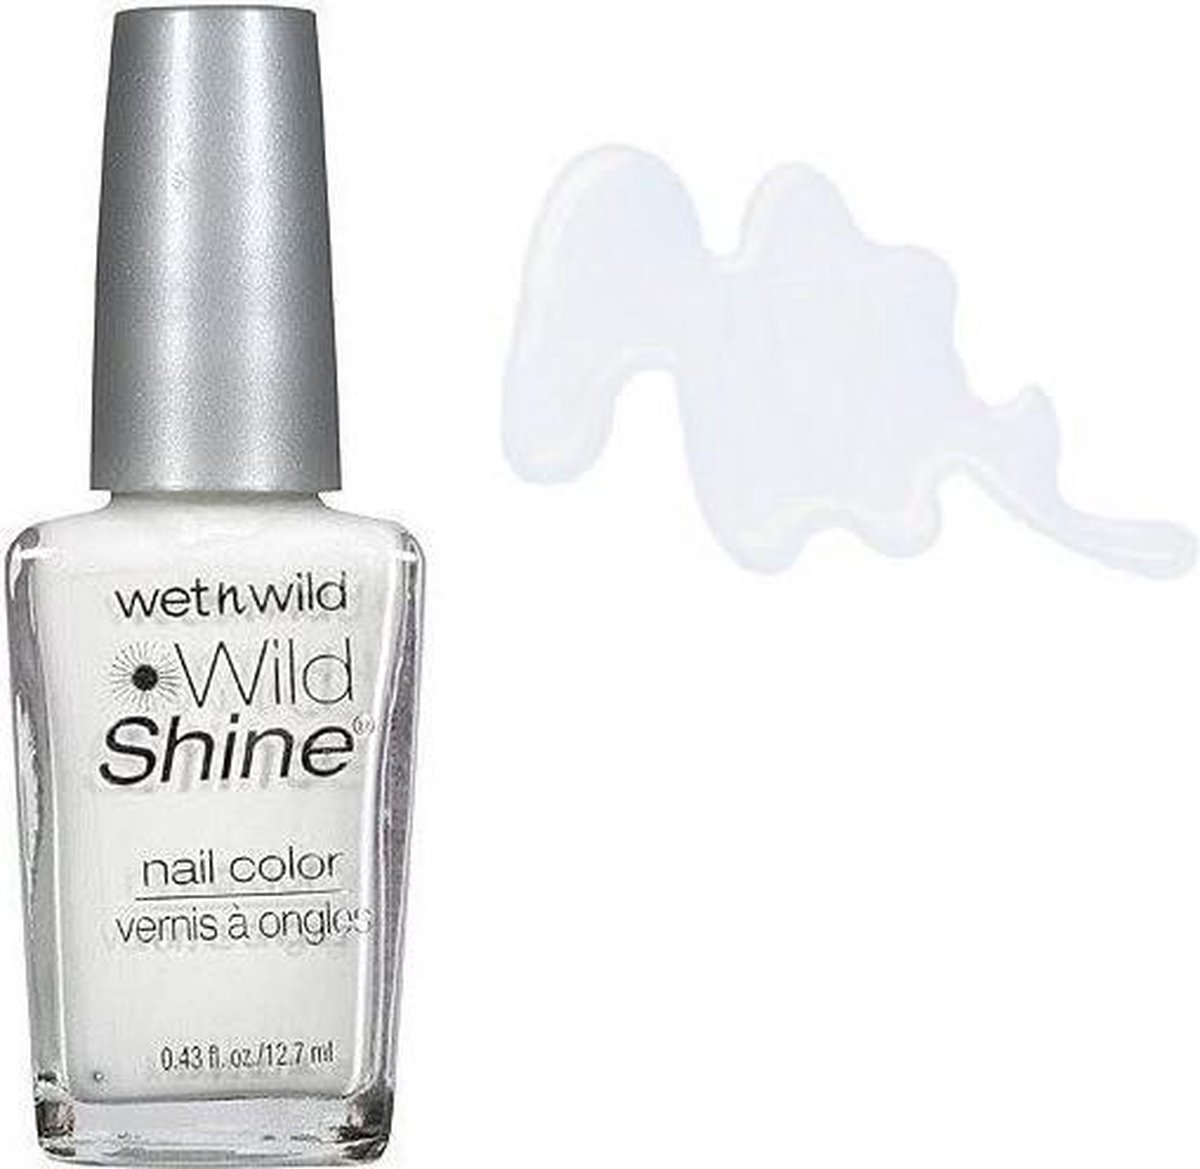 Wet 'n Wild Wild Shine Nail Color - C449C French White Creme